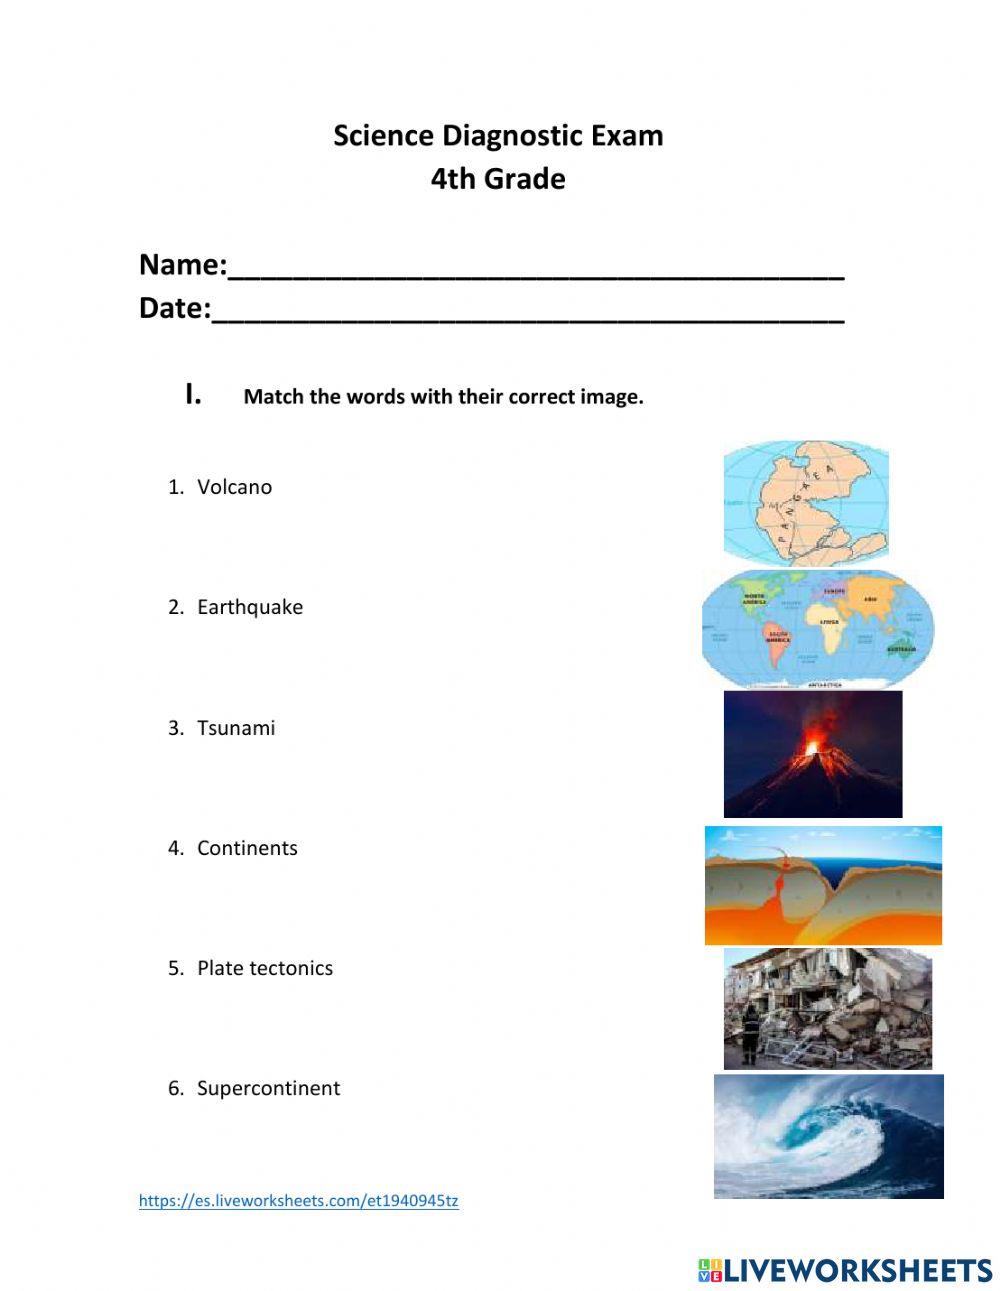 Science Diagnostic Exam 4th grade